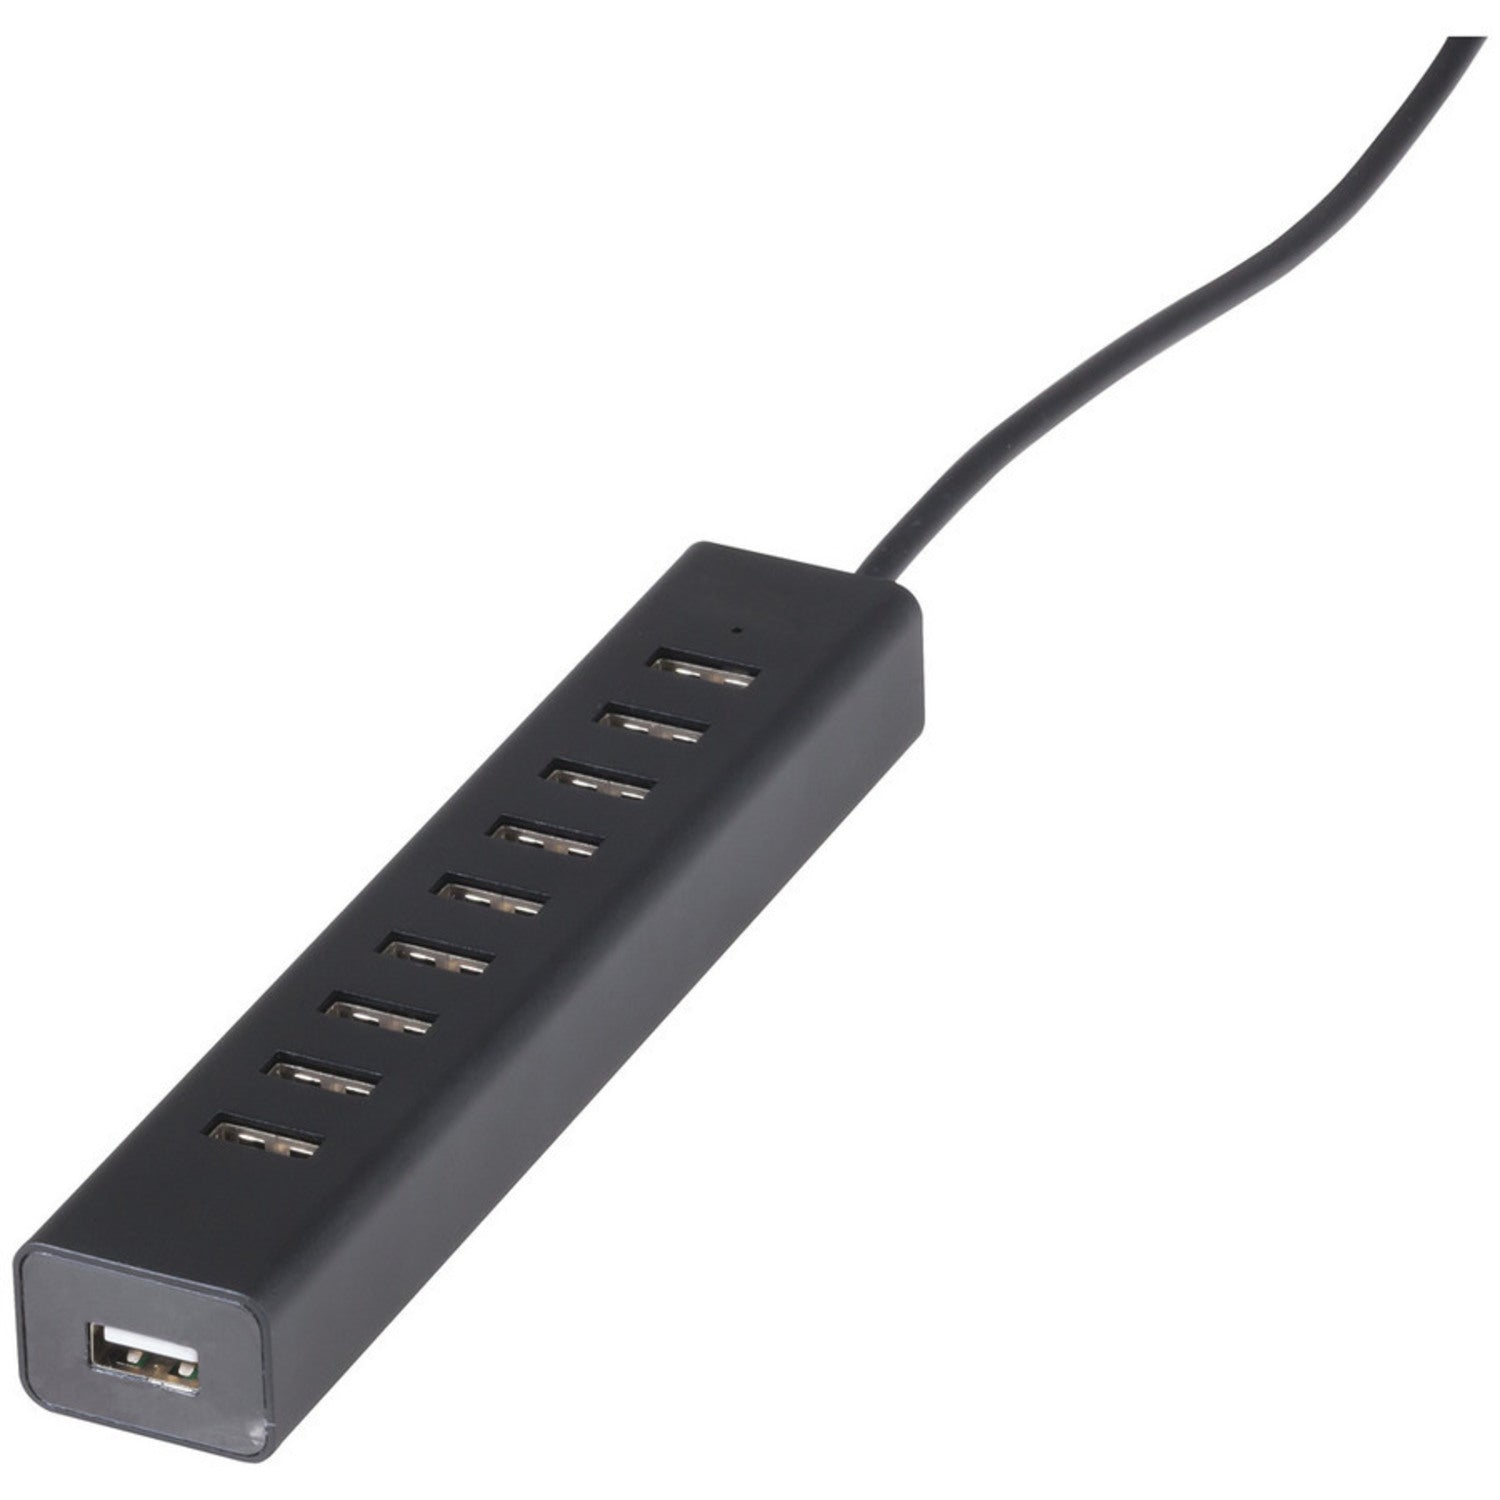 USB 2.0 Powered 10 Port Slimline Hub + Charger